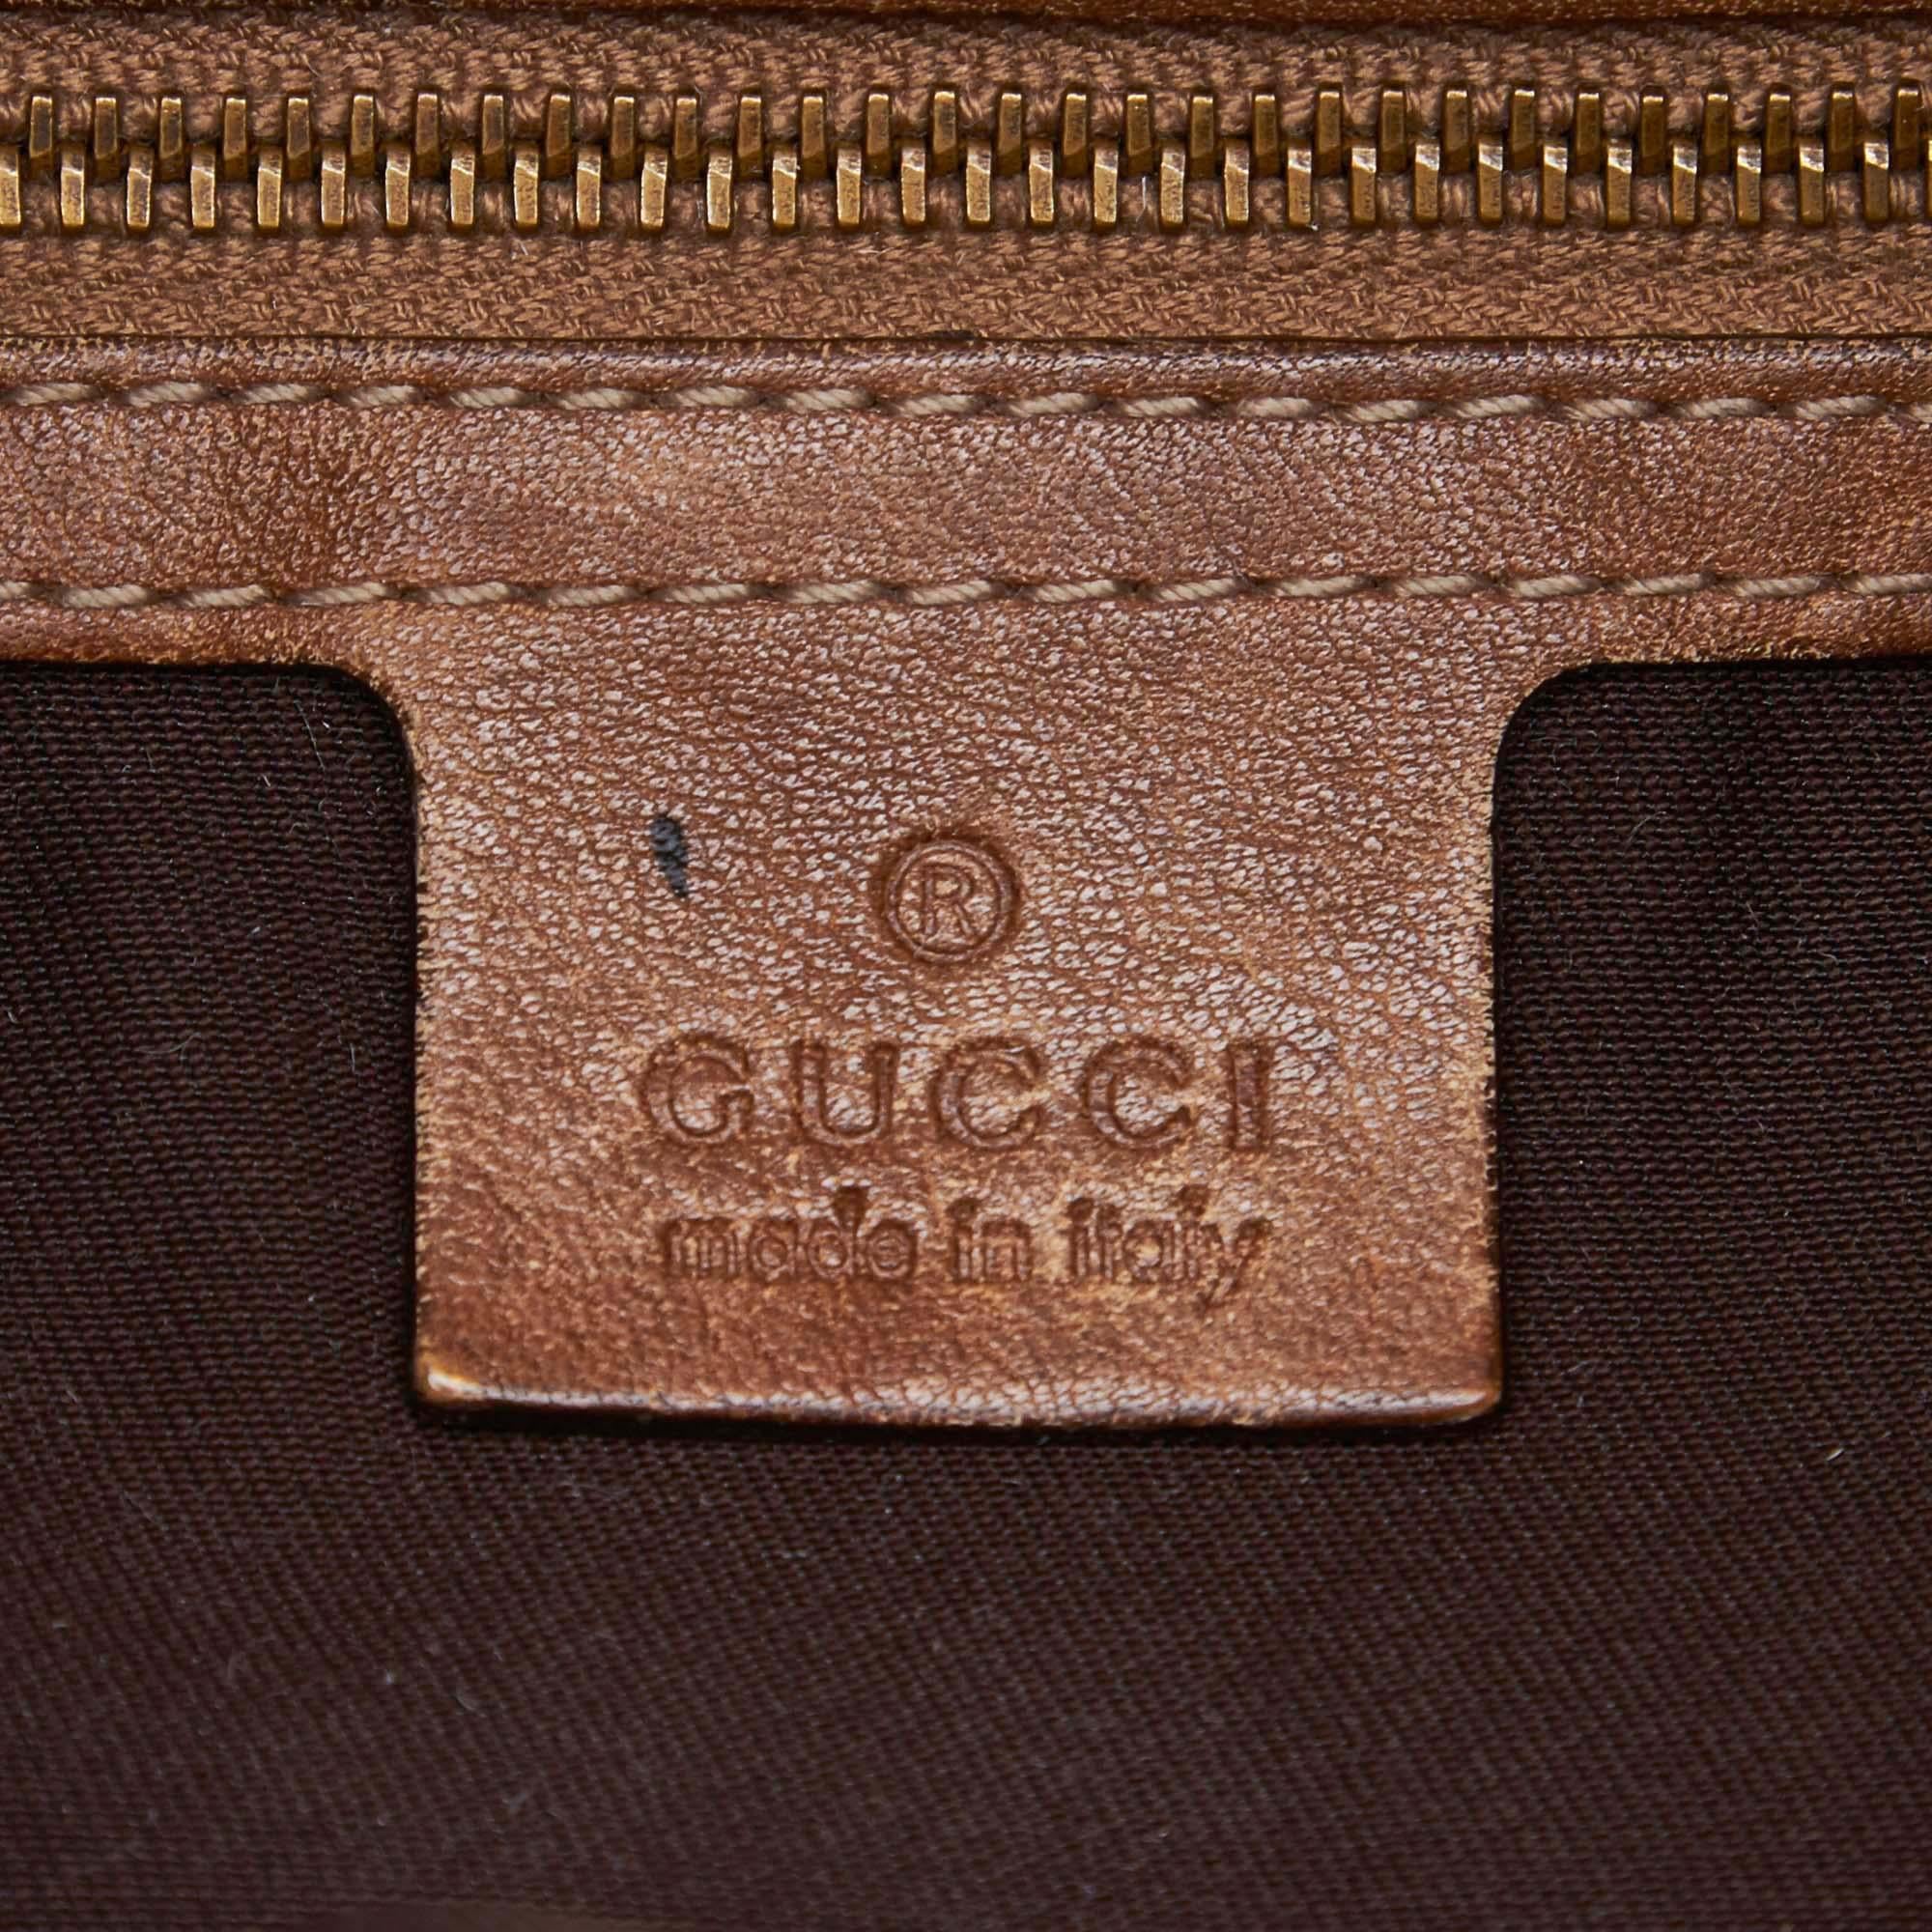 Vintage Authentic Gucci Black Leather New Pelham Satchel Italy MEDIUM  For Sale 2